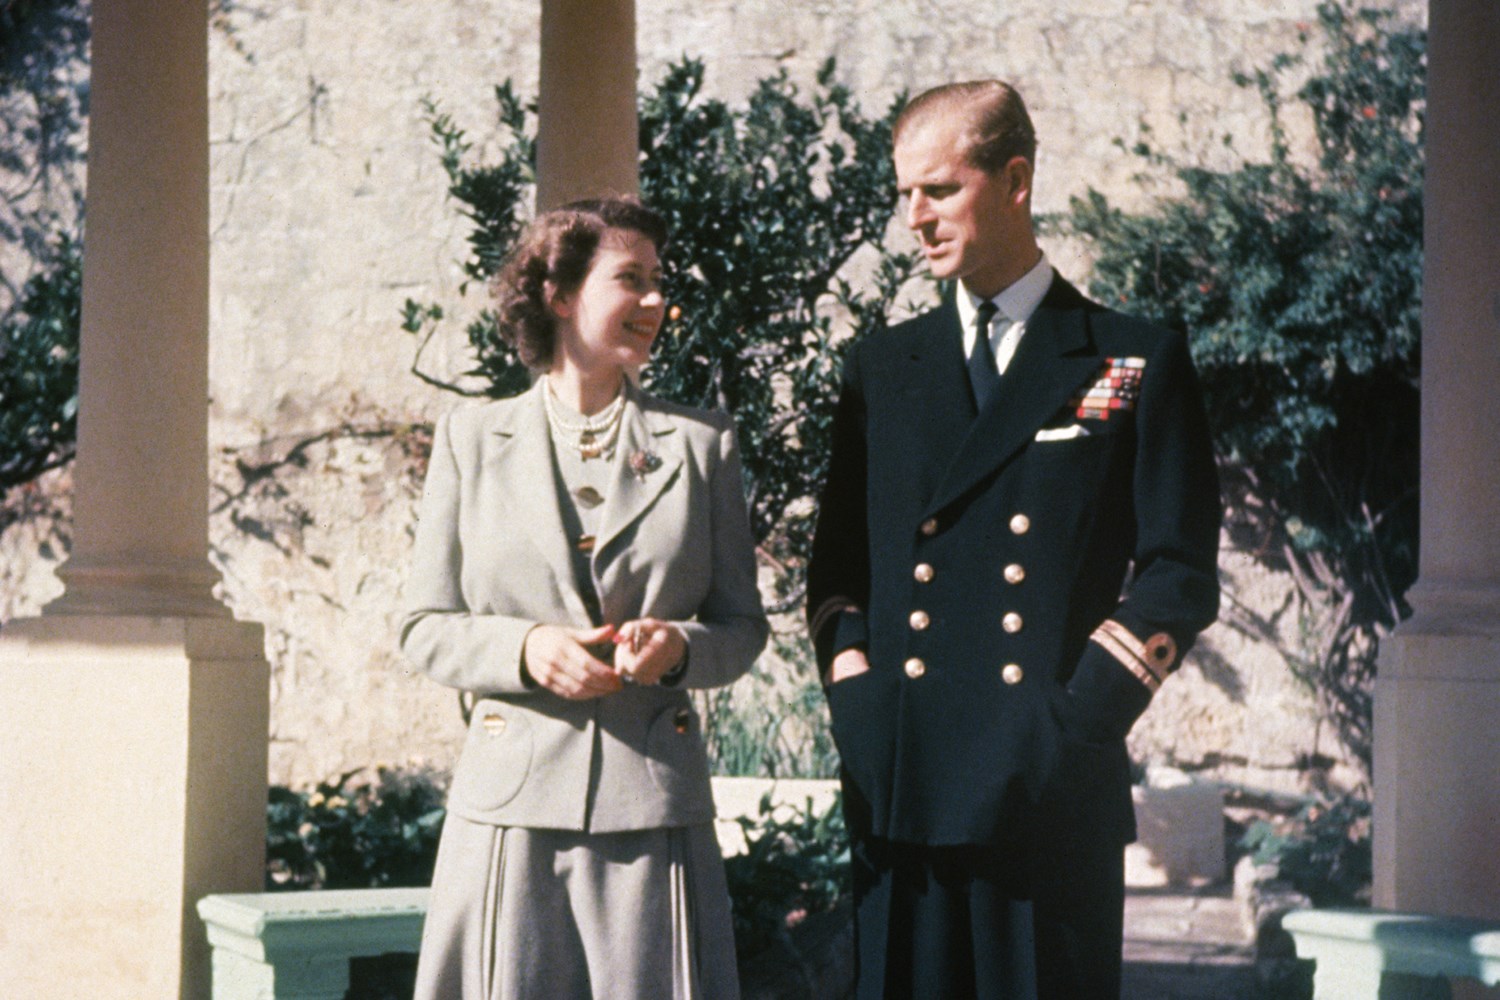 Queen Elizabeth II and Prince Philip young